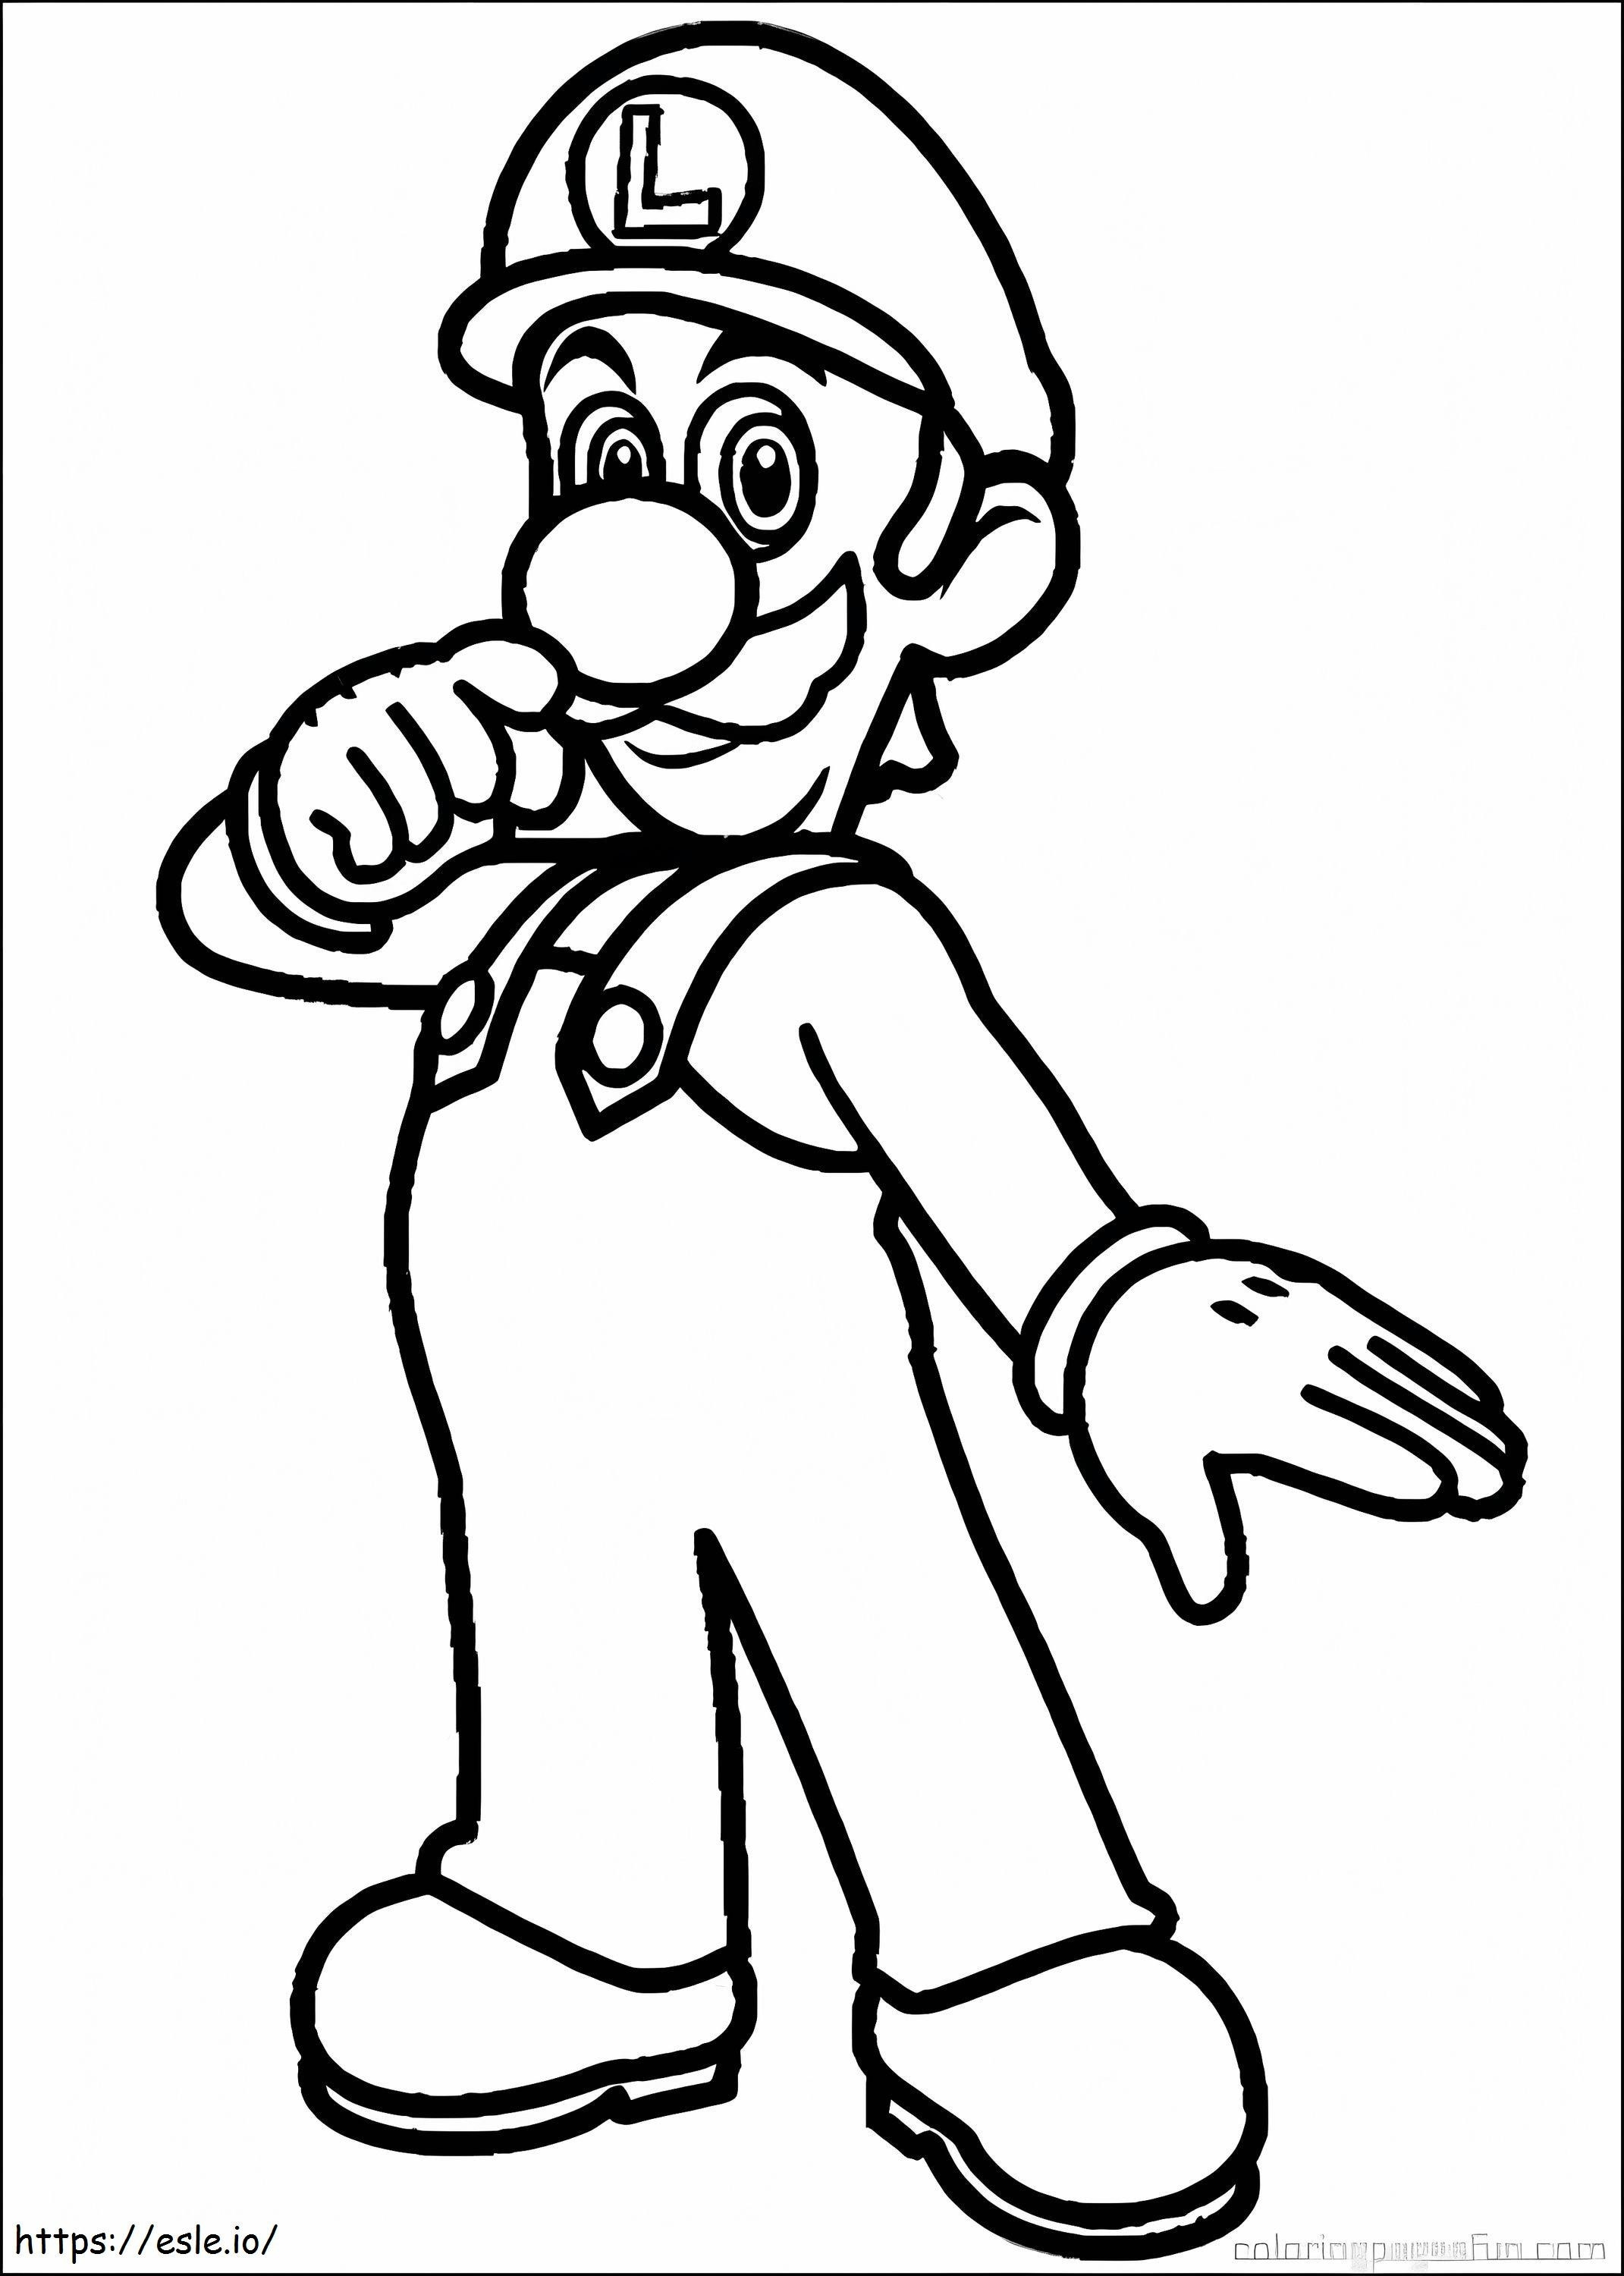 Coloriage Luigi impressionnant à imprimer dessin